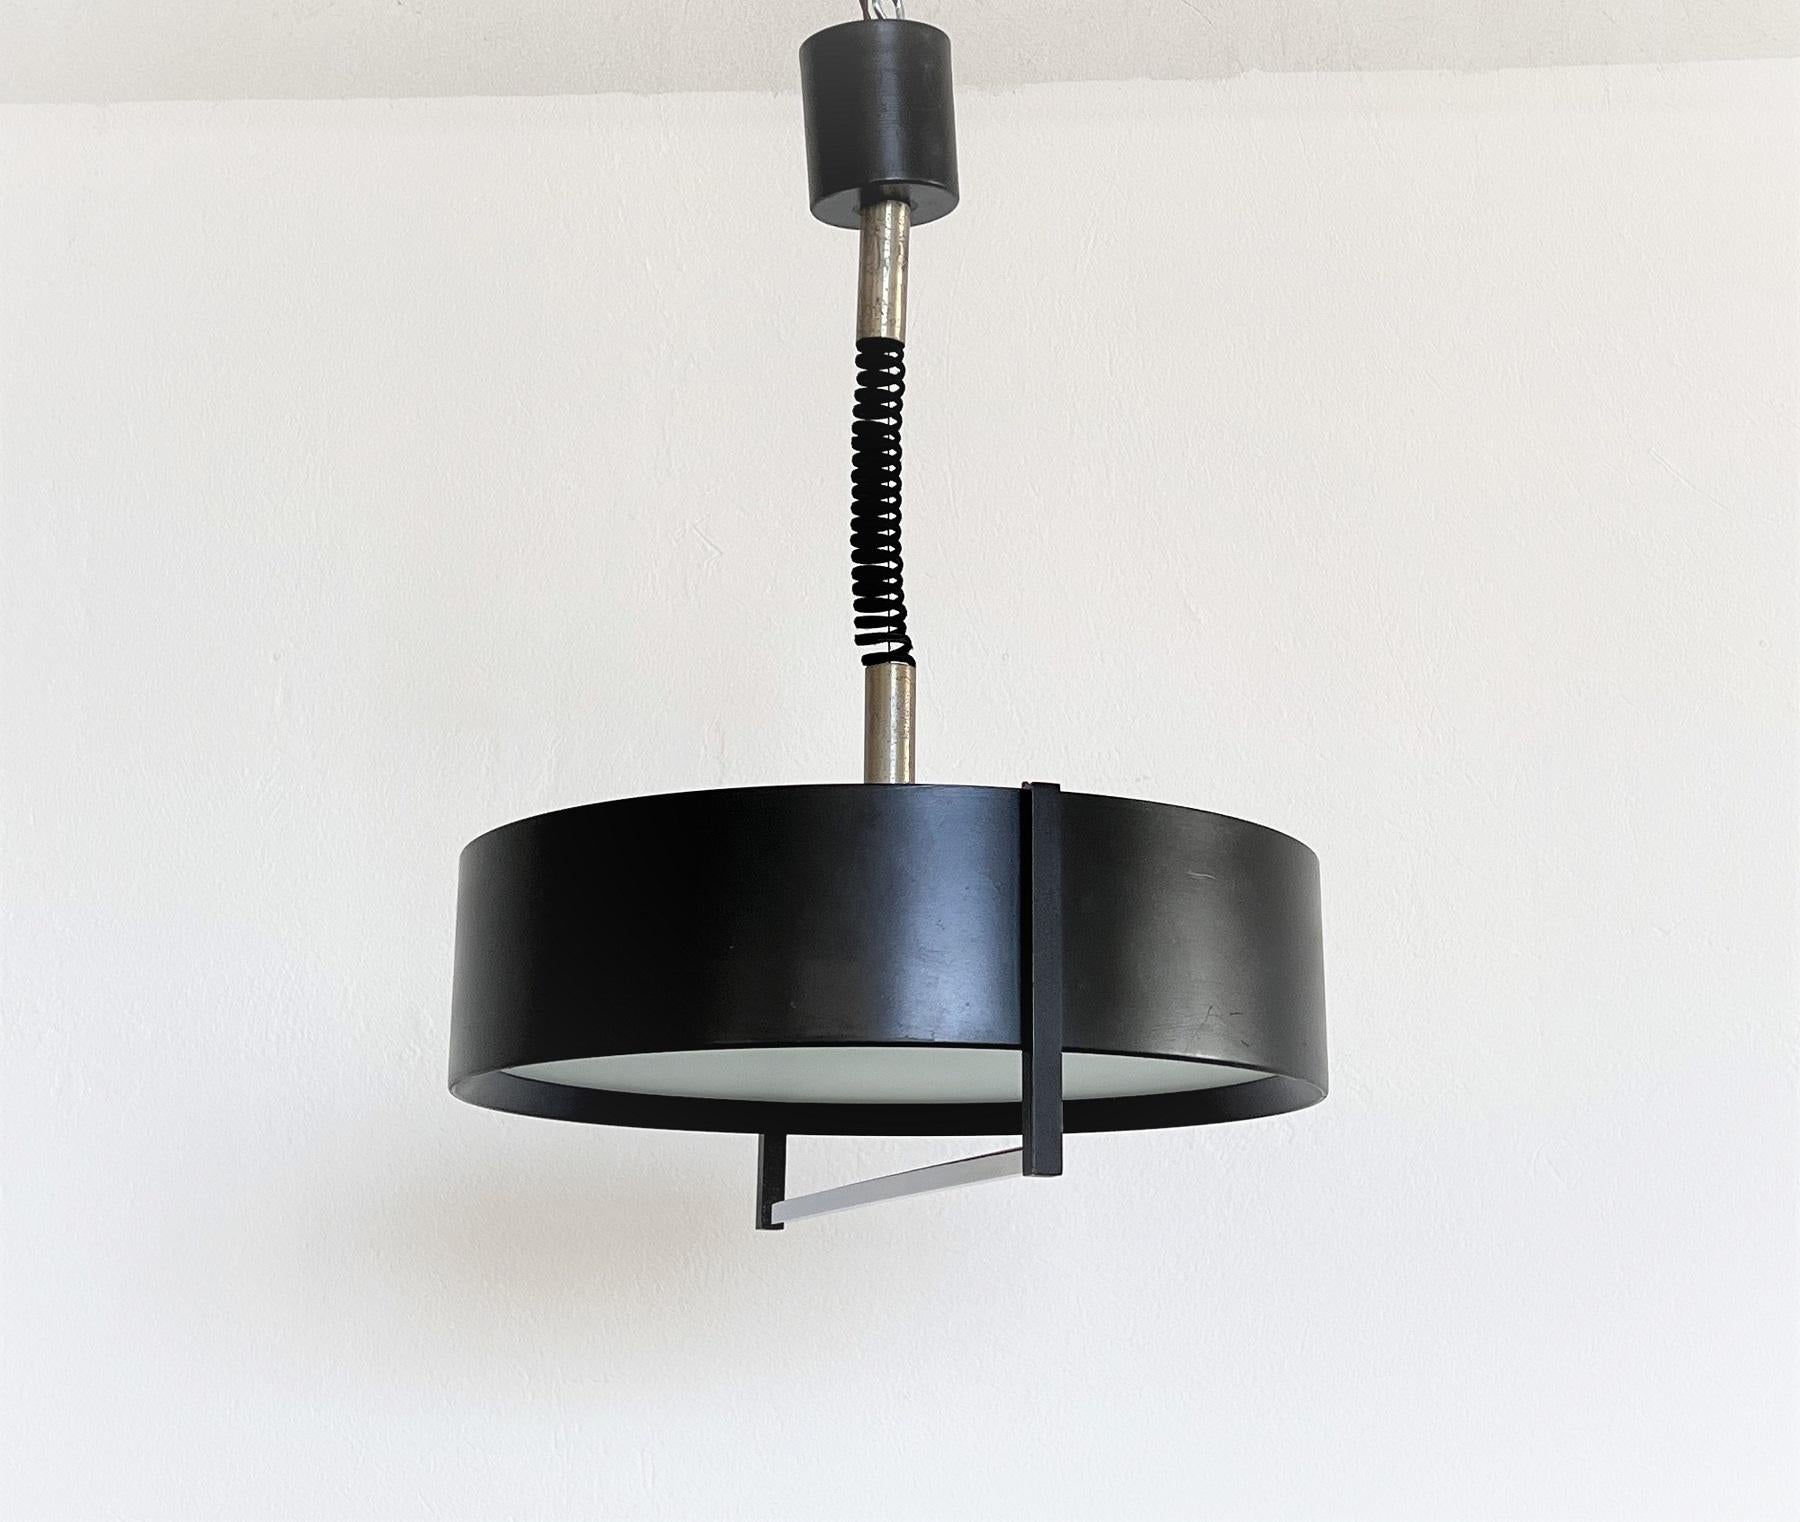 Italian Stilnovo Pendant Lamp in Metal and Glass, 1960s For Sale 6